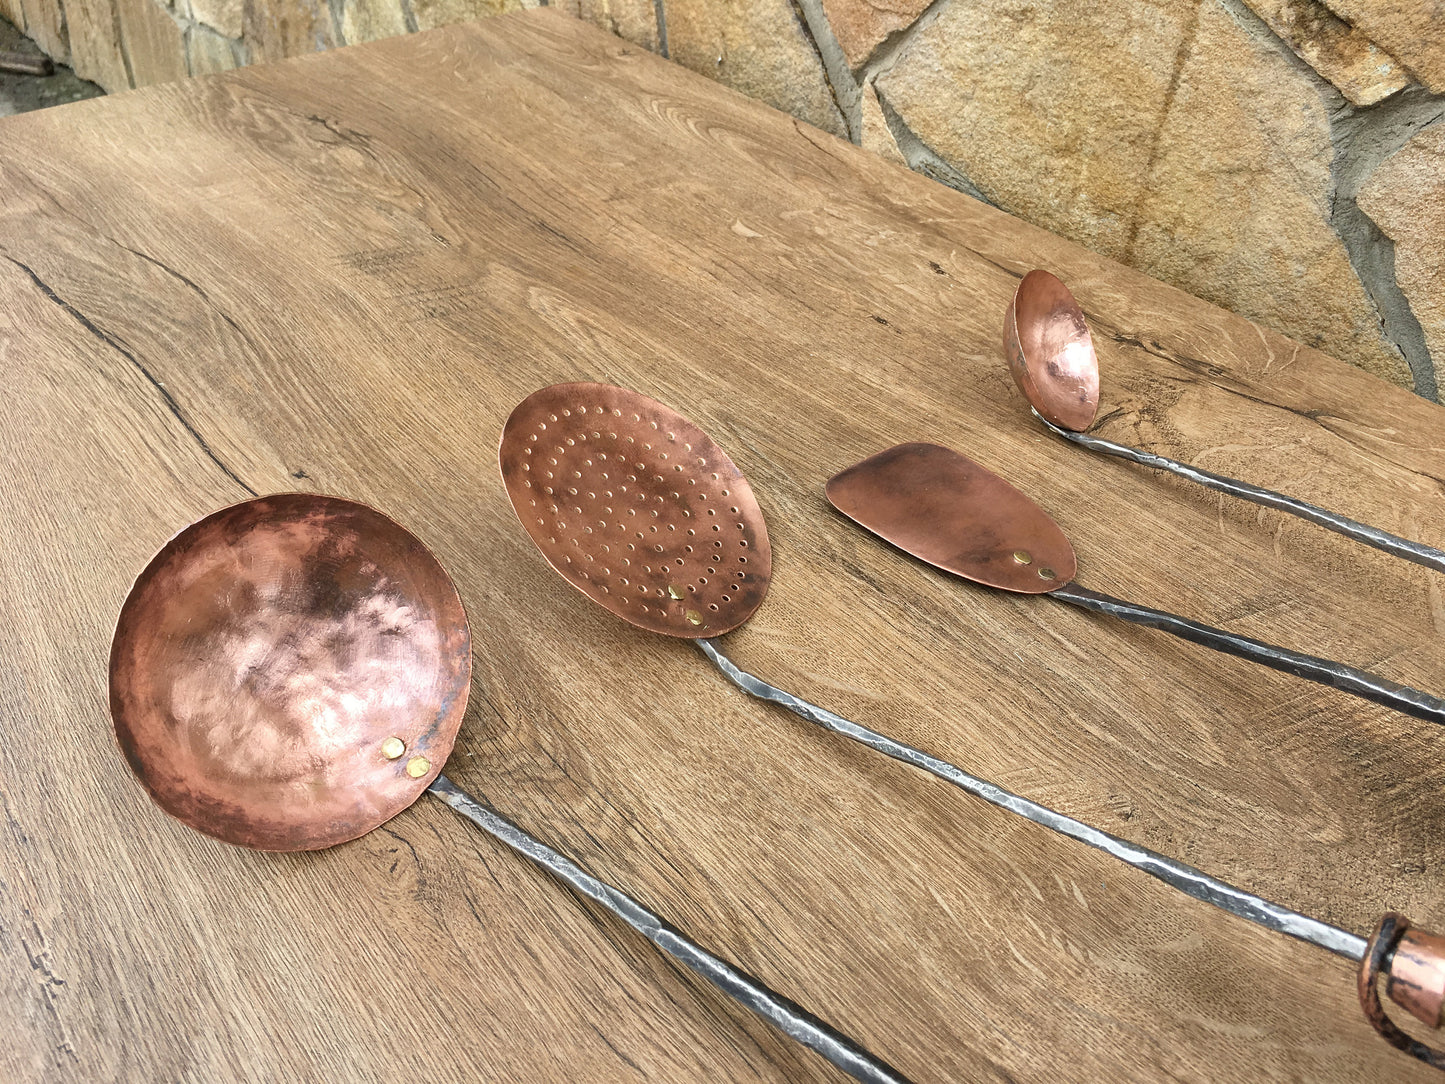 Copper serving set, medieval cutlery, ladle, ladle water dipper, spatula, medieval gift, copper ladle, serving utensils,kitchen utensils